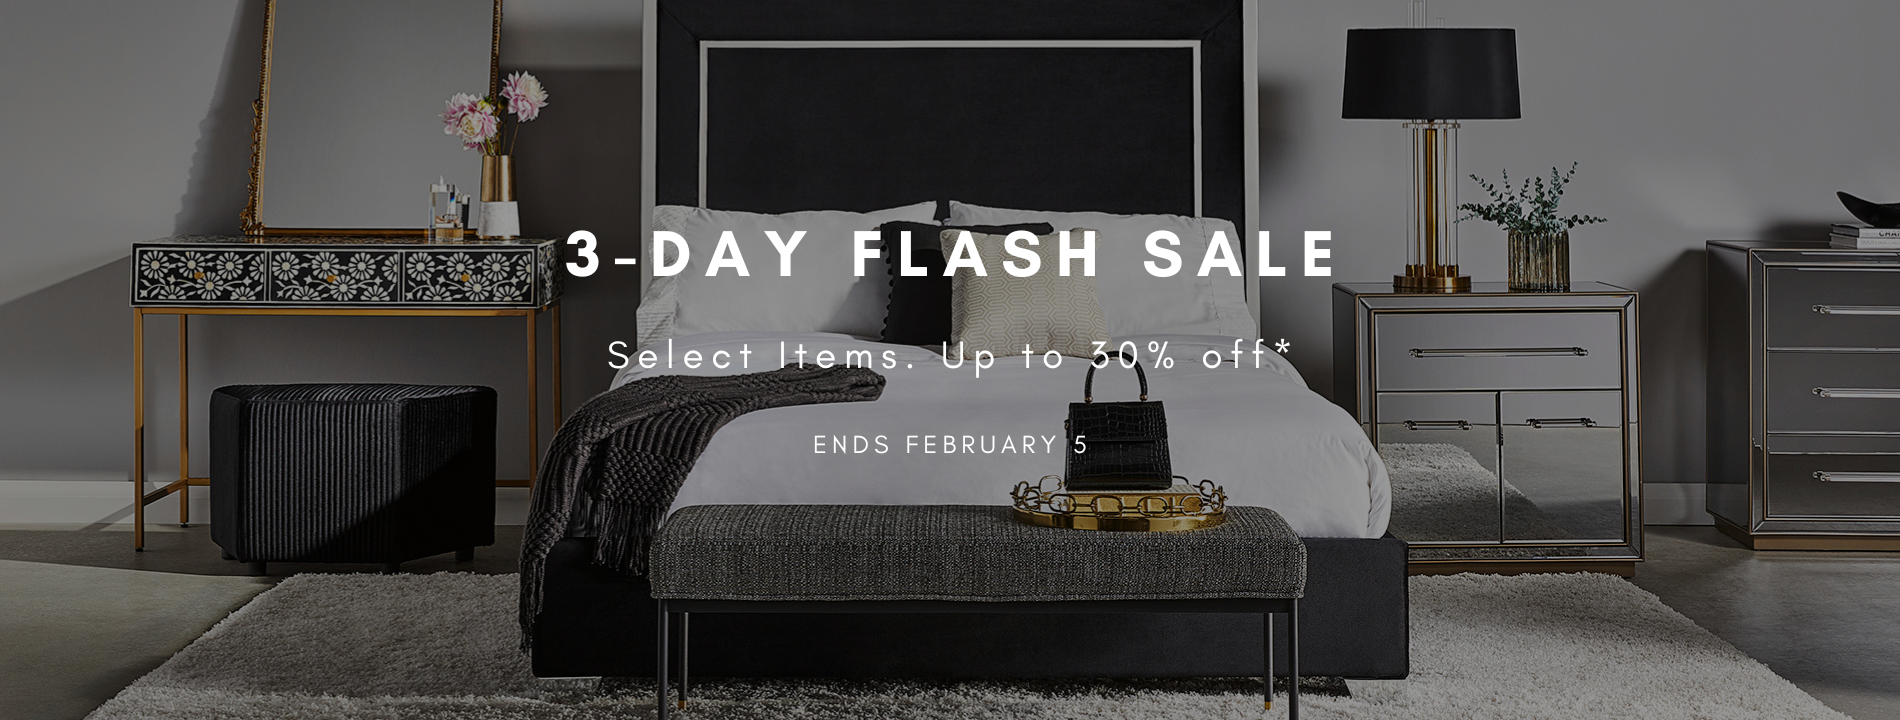 3-Day Flash Sale